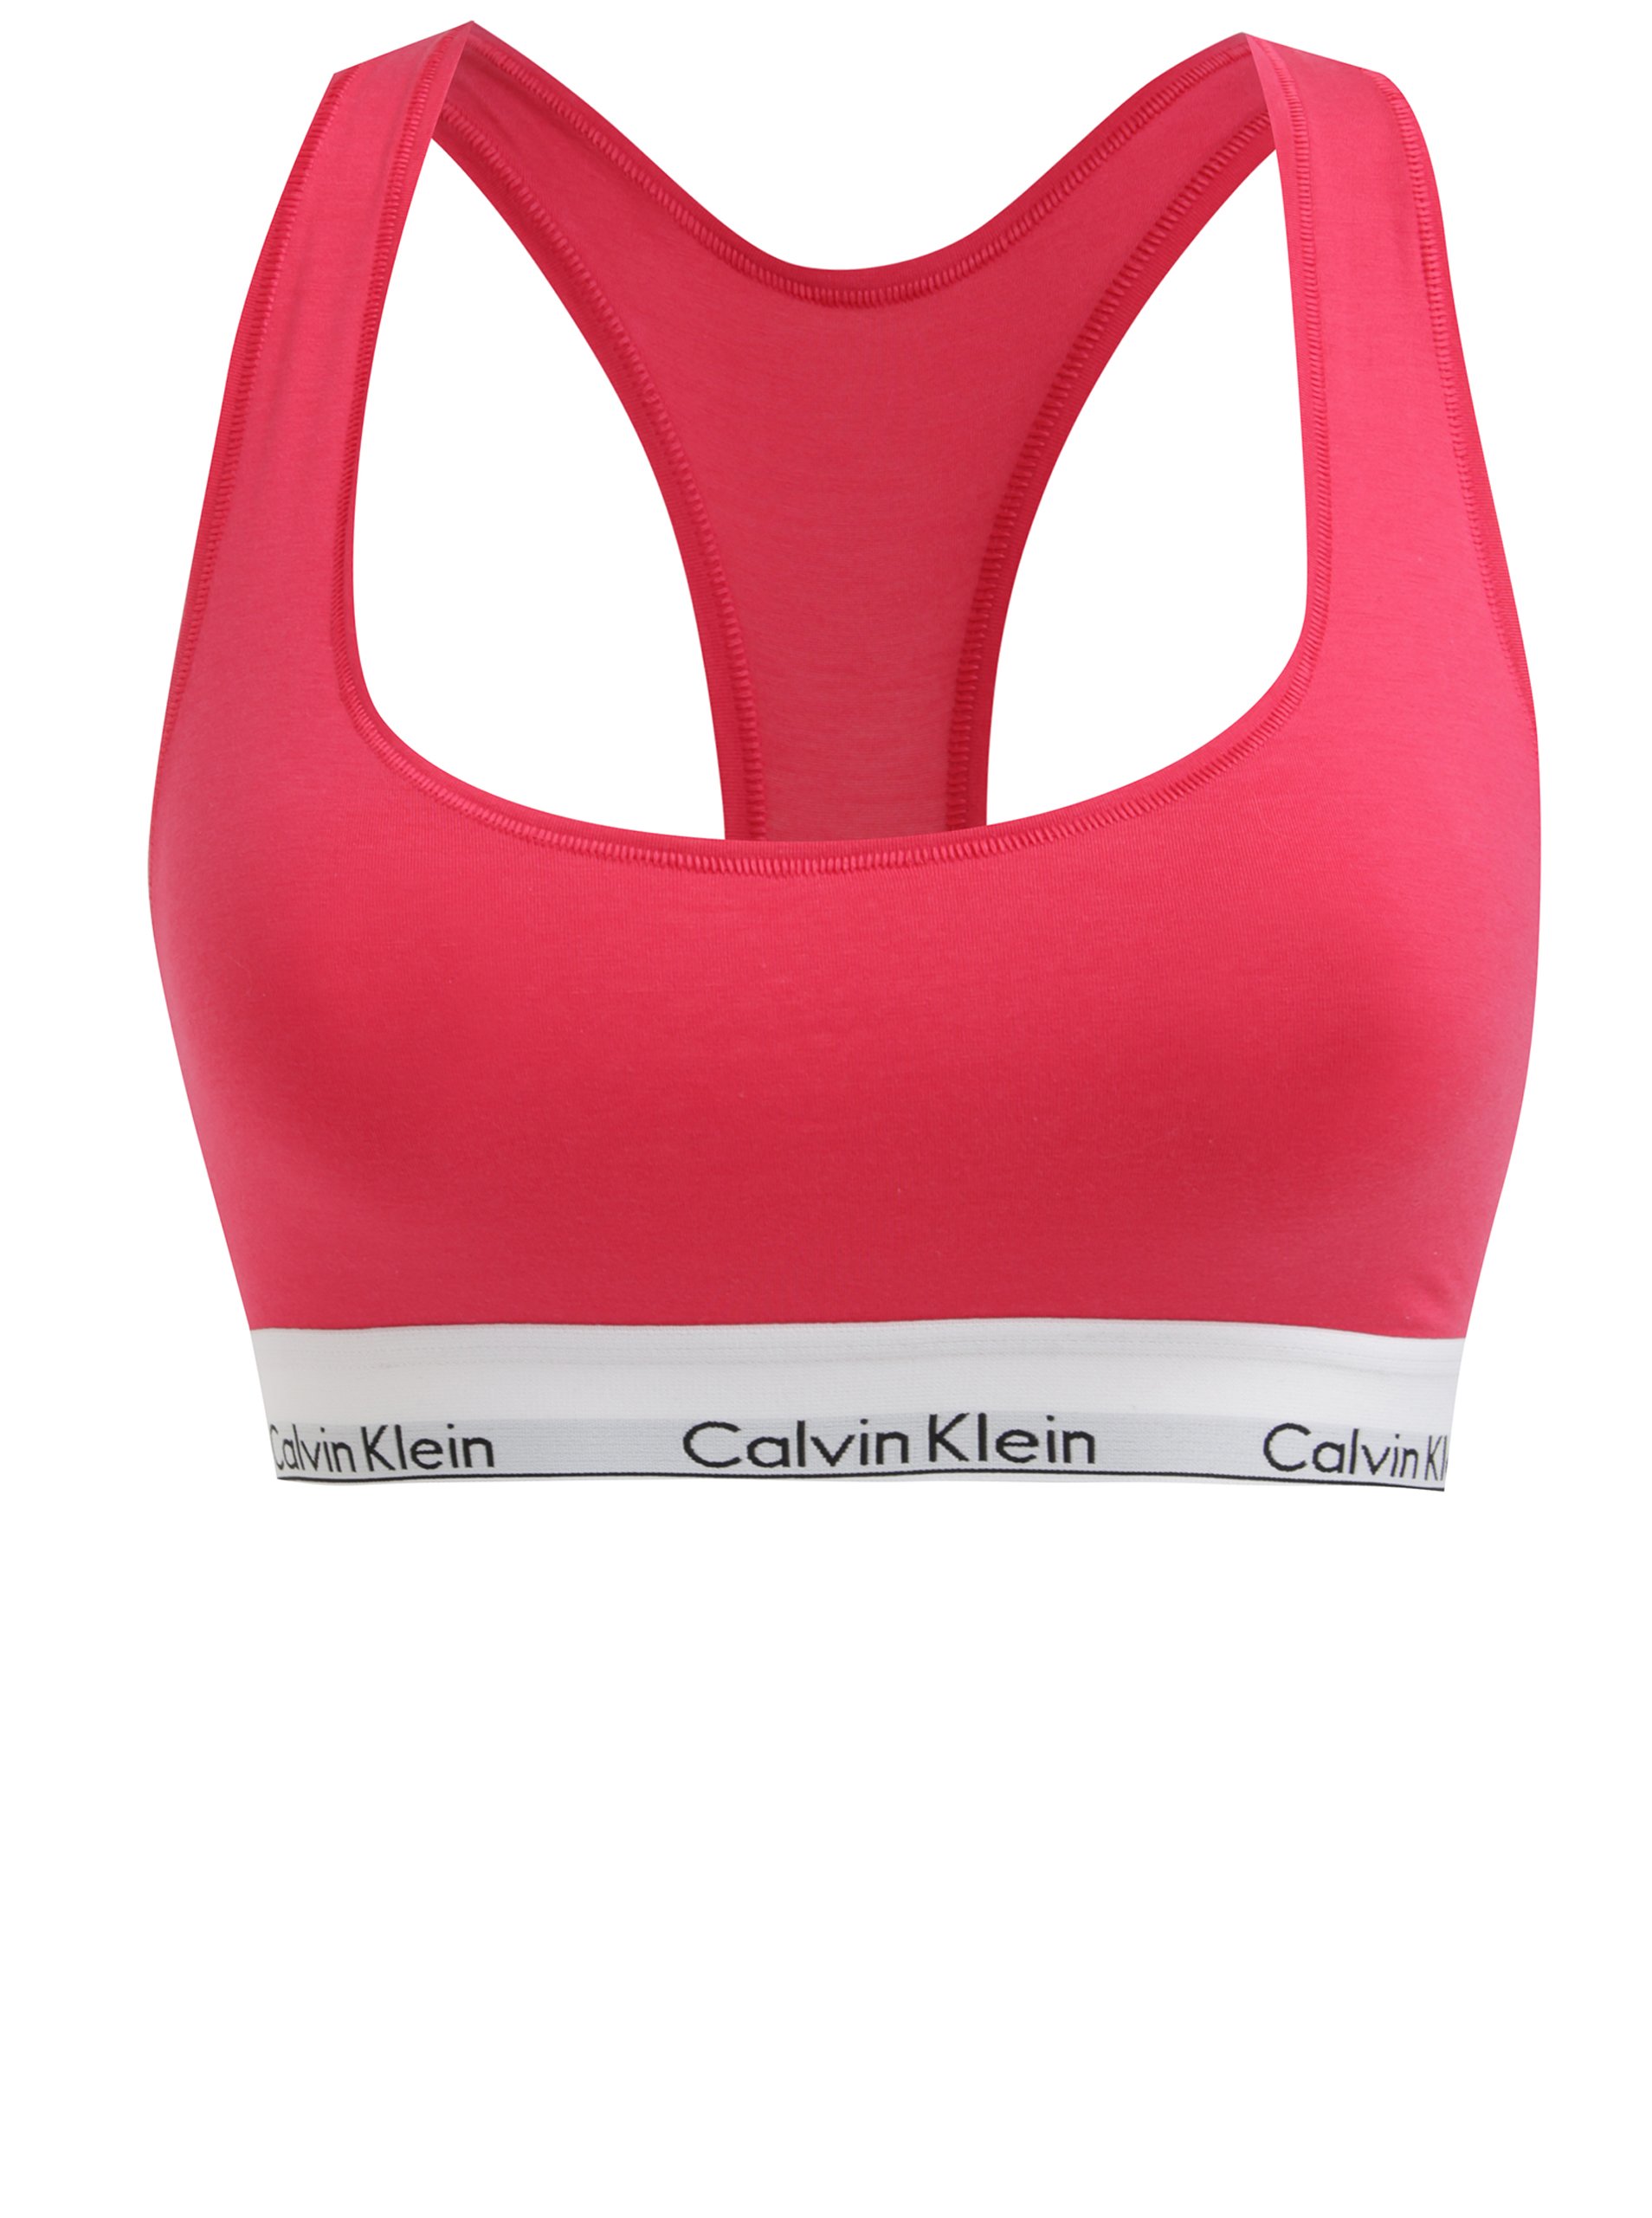 Lacno Ružová športová podprsenka Calvin Klein Underwear